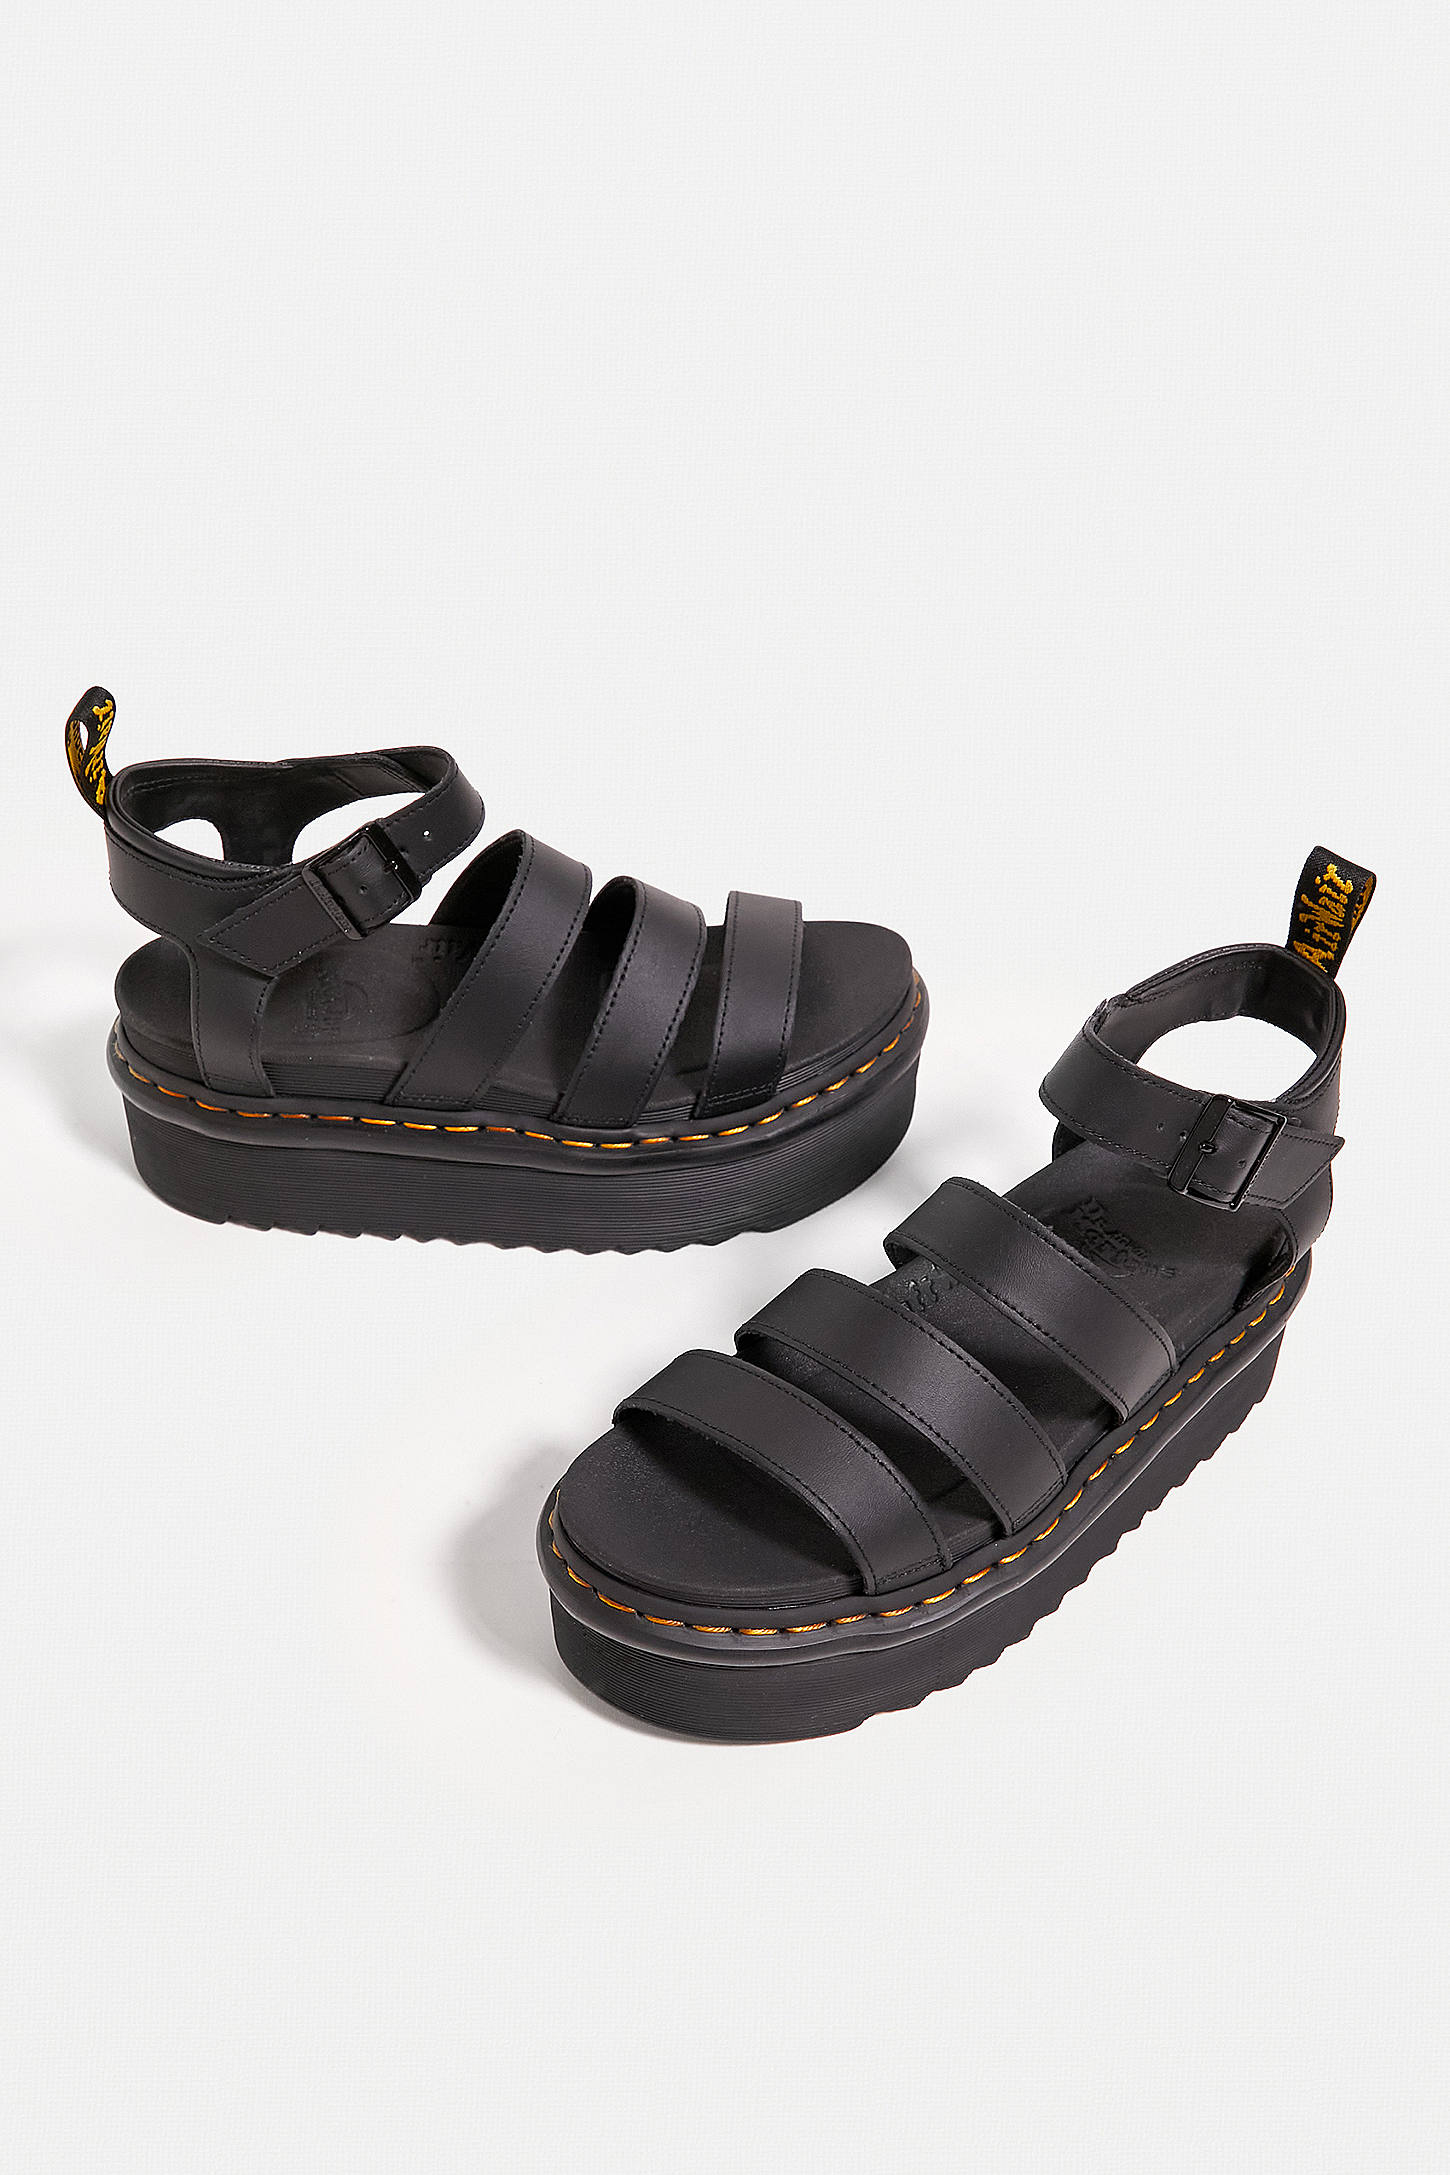 Dr. Martens Blaire Hydro Quad Black Sandals, Urban Outfitters